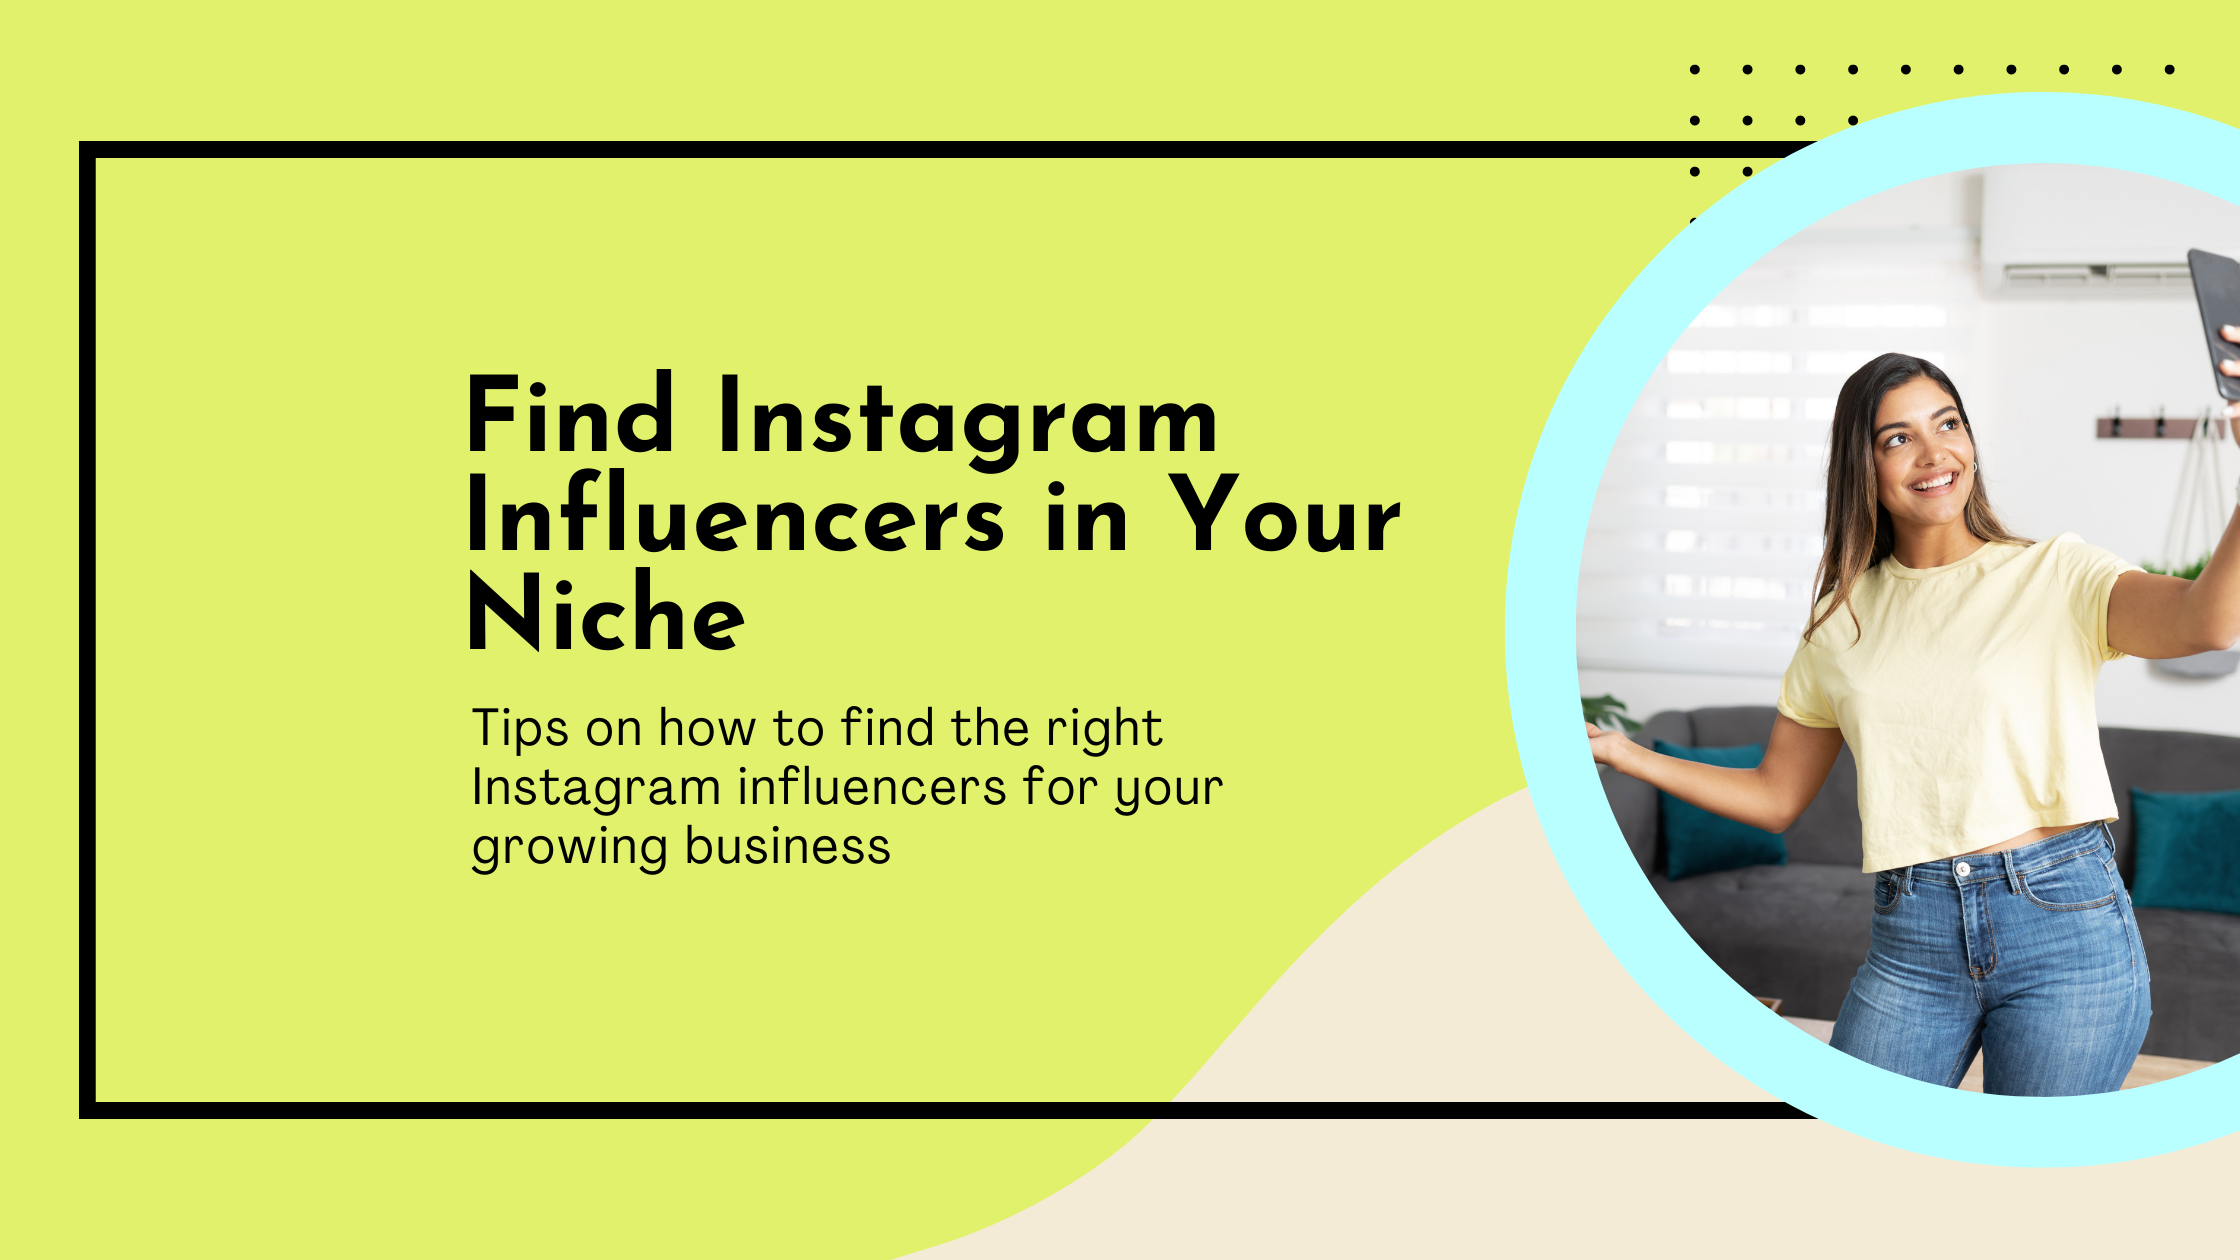 Find Instagram Influencers in Your Niche